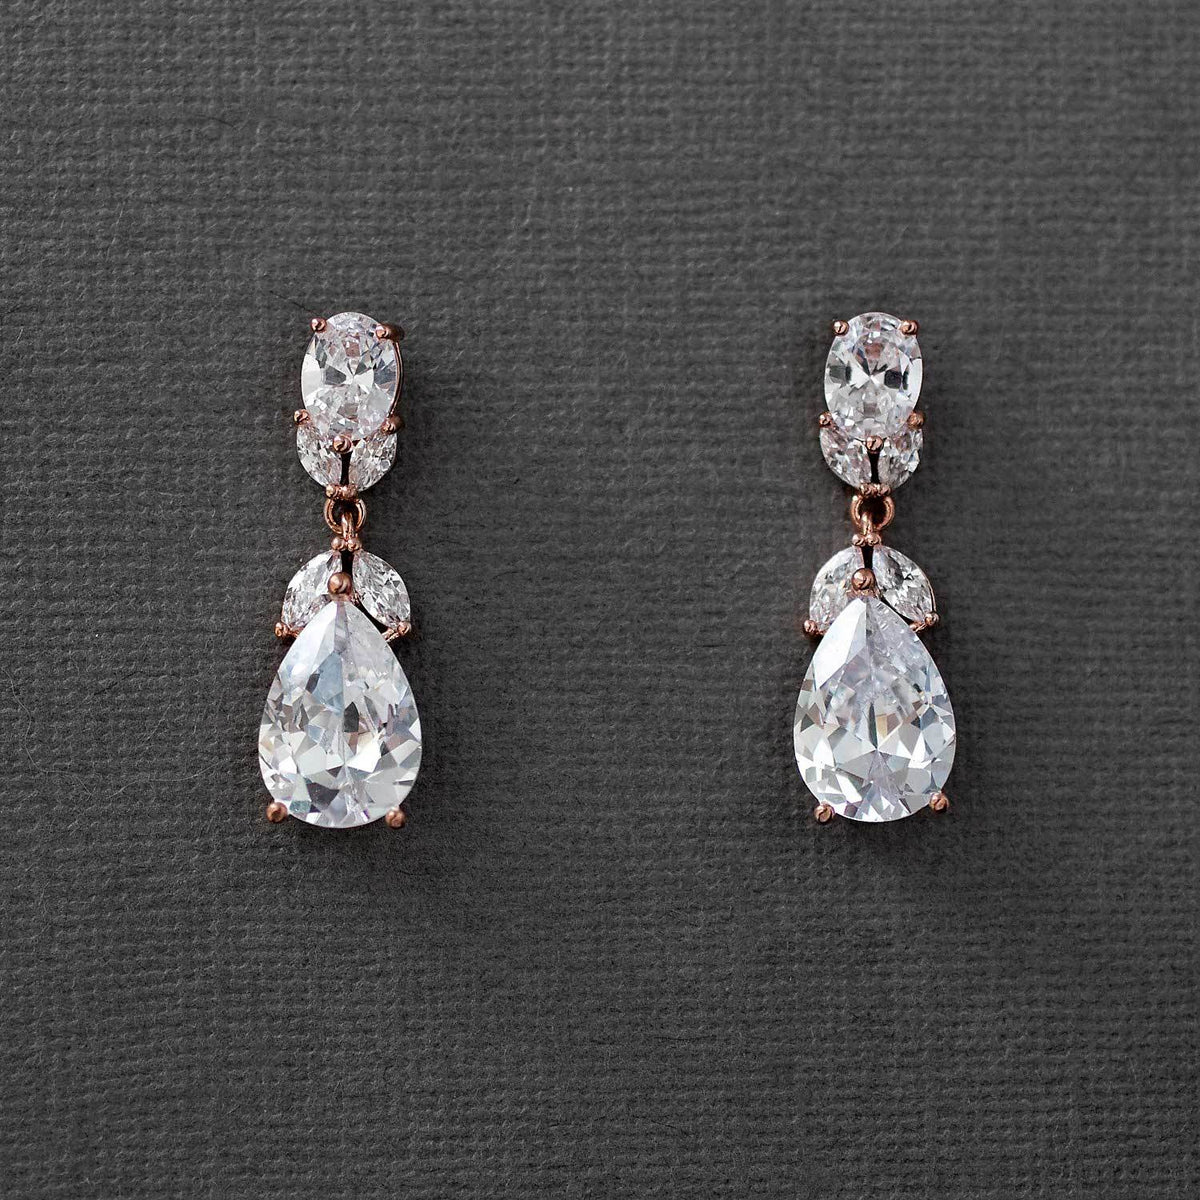 Classic Wedding CZ Earrings Teardrop and Oval Jewels